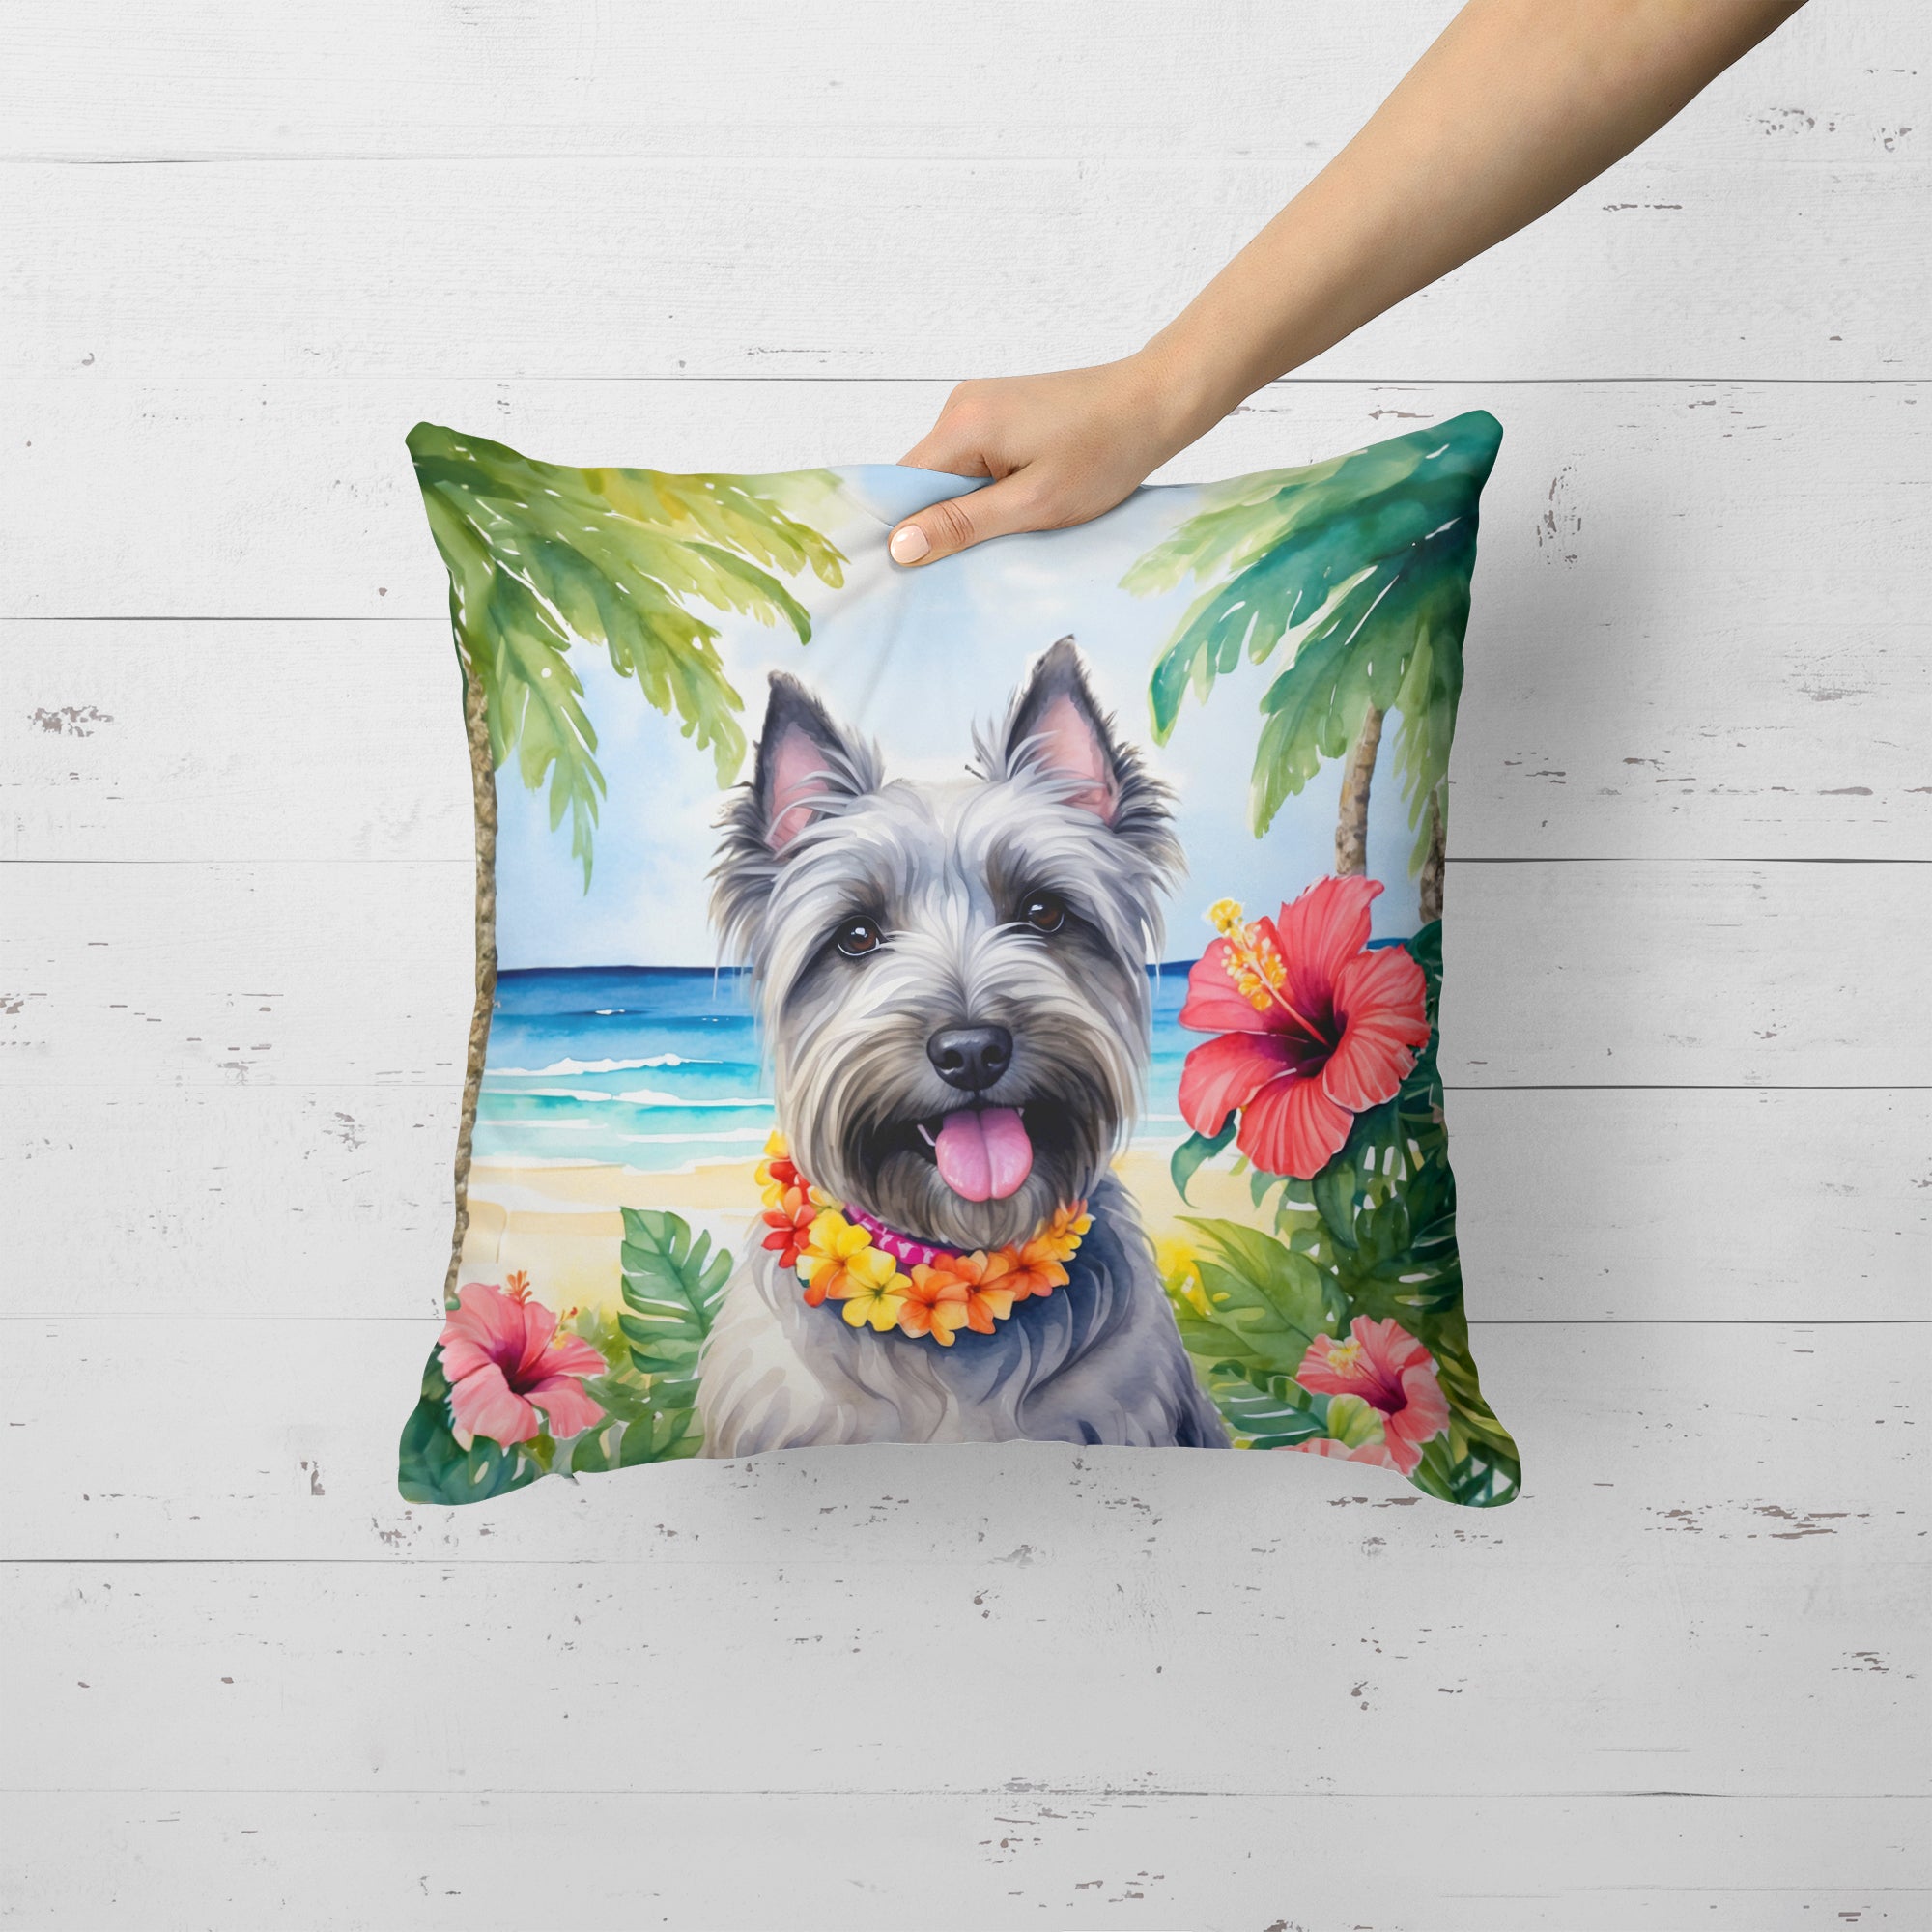 Buy this Skye Terrier Luau Throw Pillow